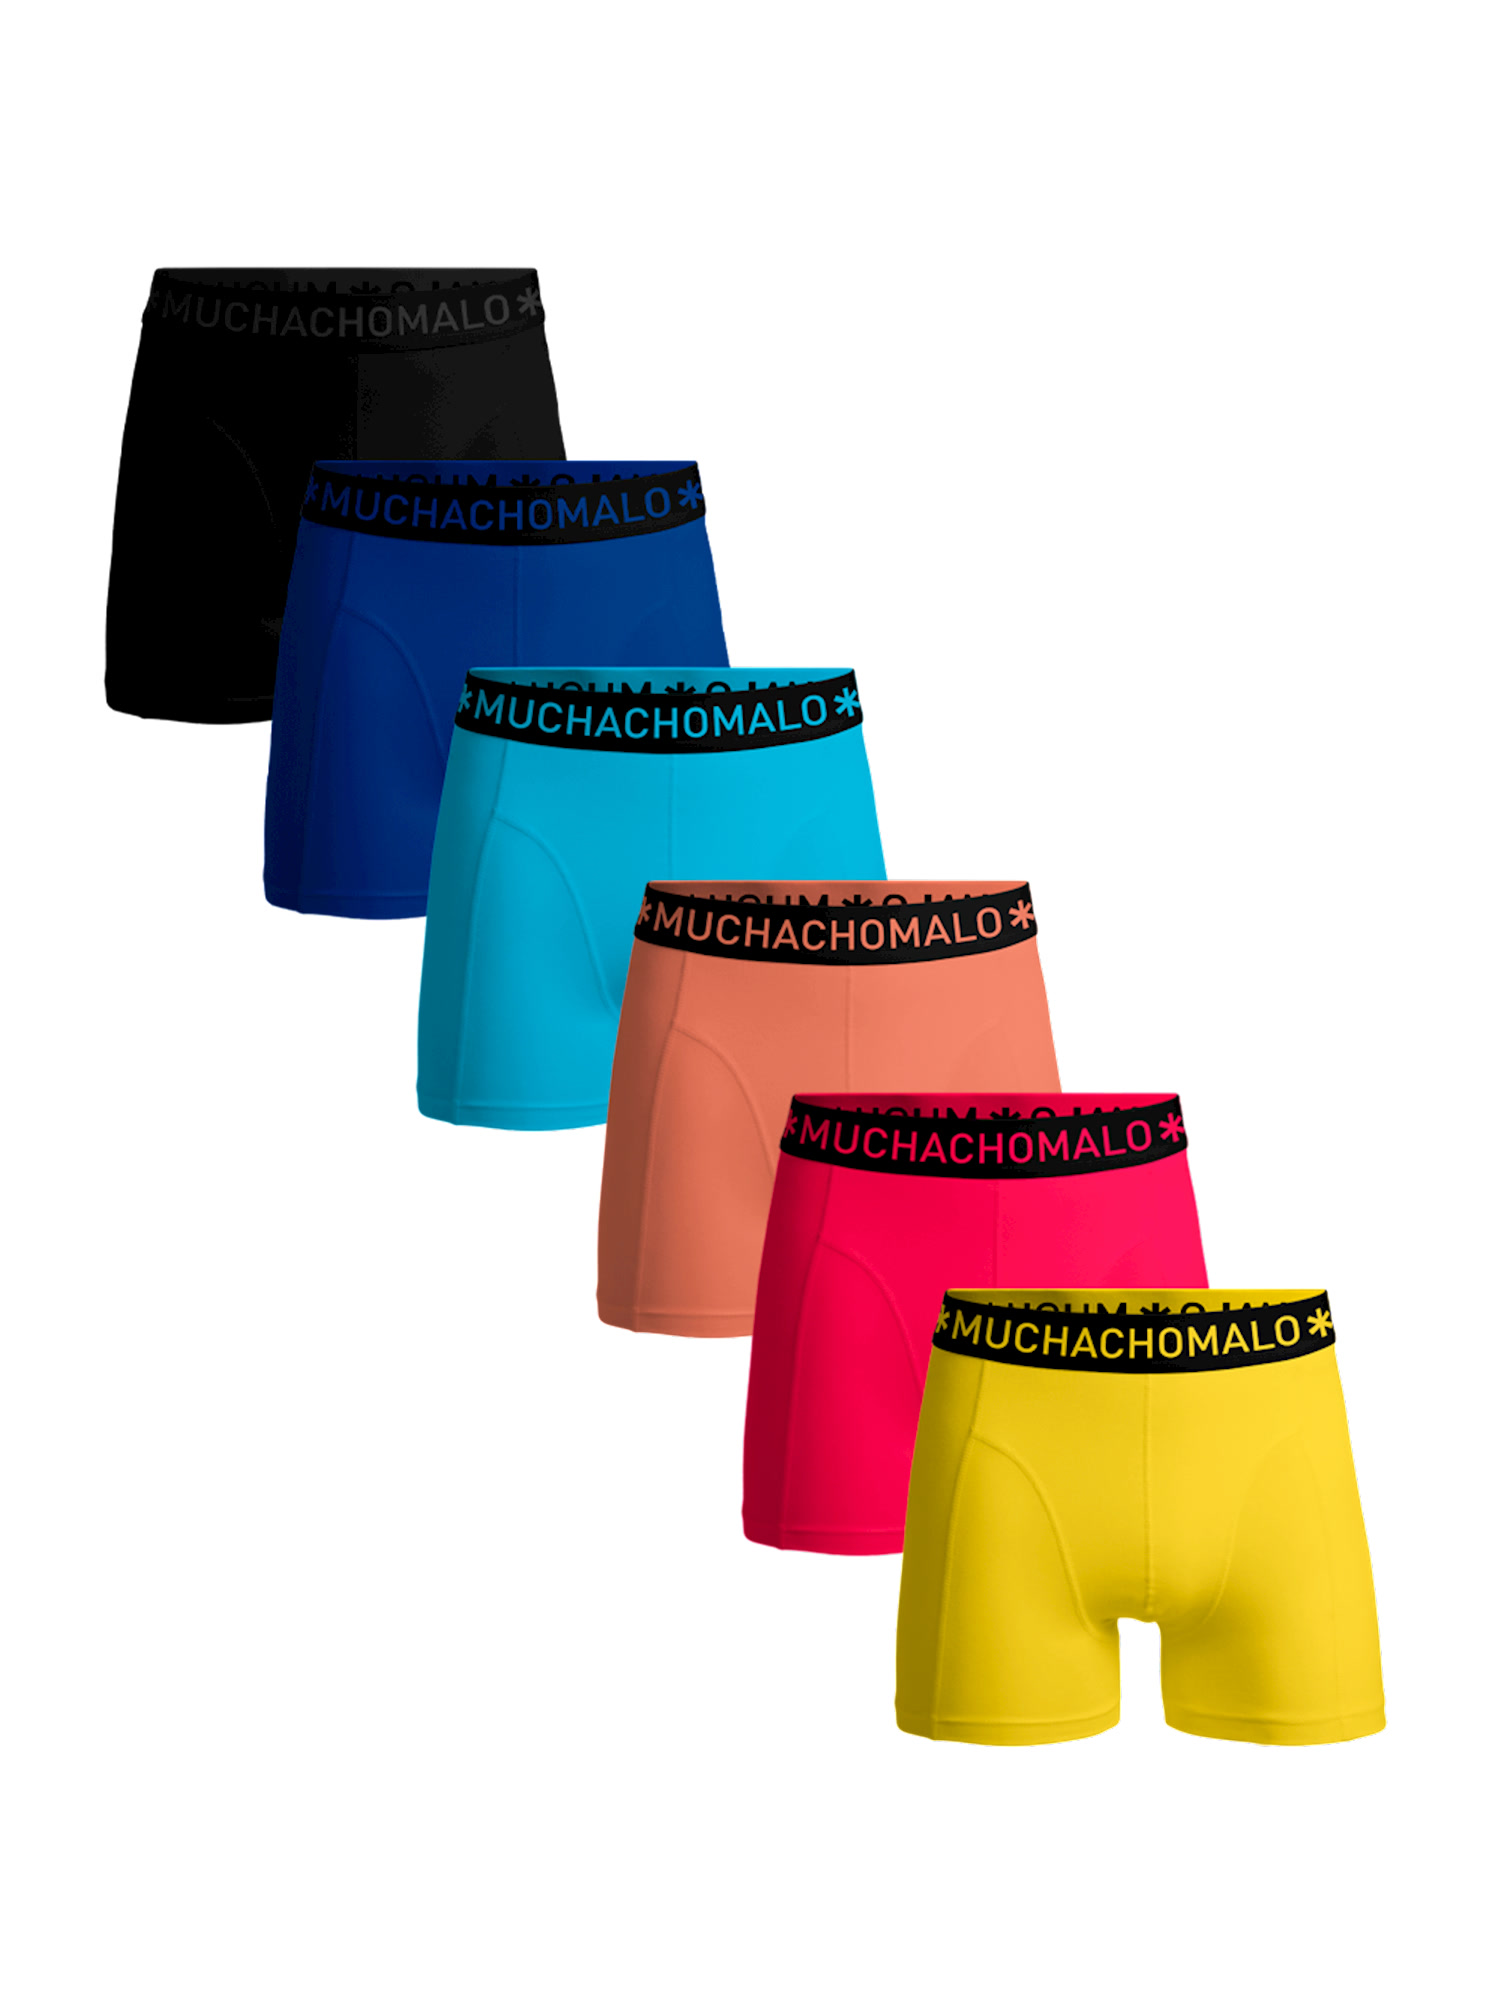 Боксеры Muchachomalo 6er-Set: Boxershorts, цвет Black/Blue/Blue/Pink/Orange/Yellow